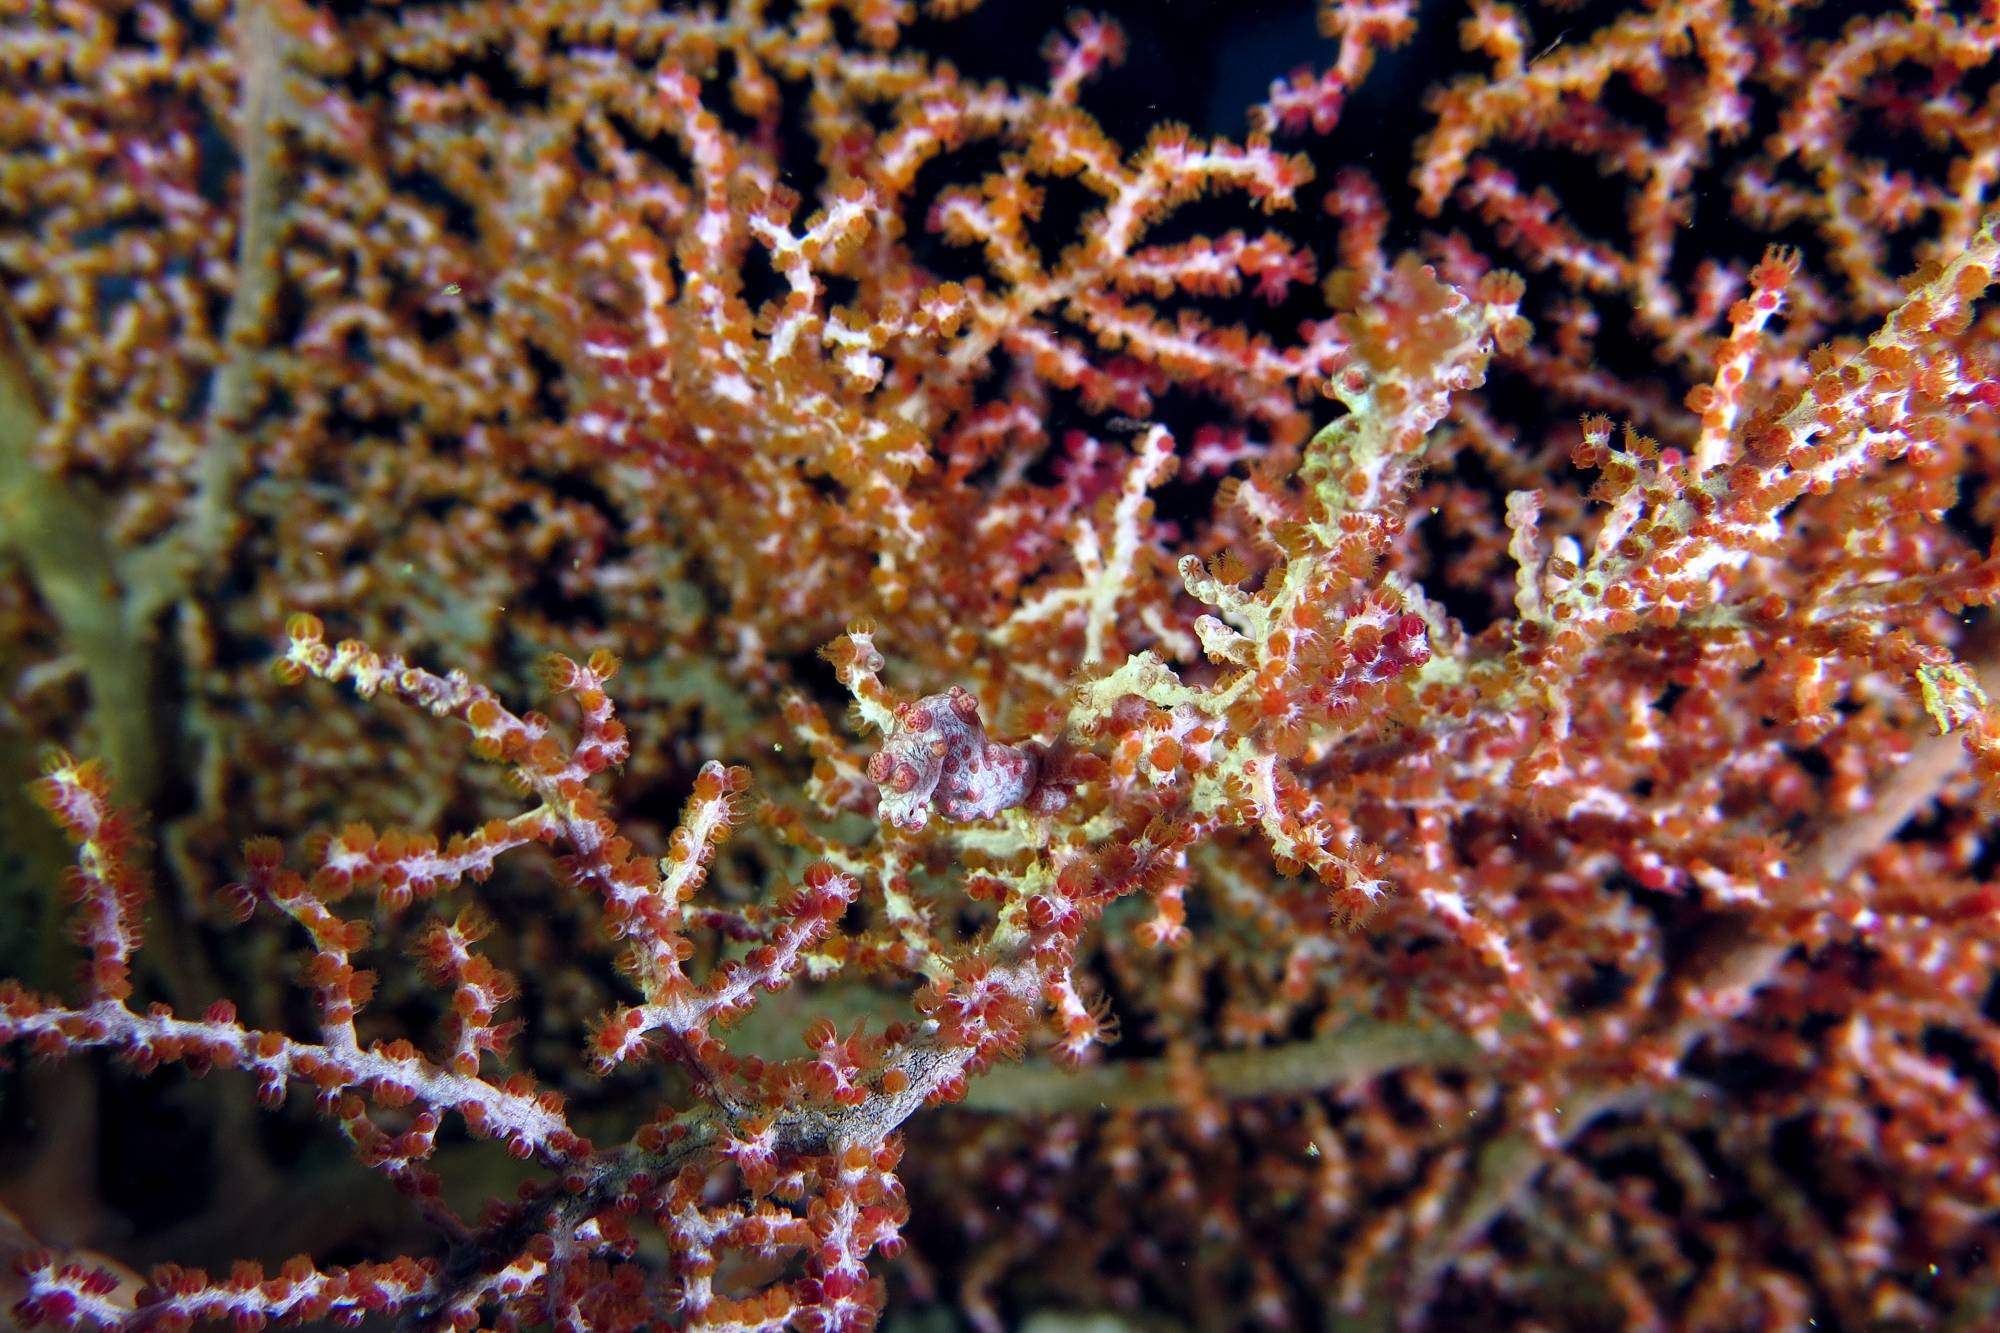 Hippocampus bargibanti, Muricella plectana